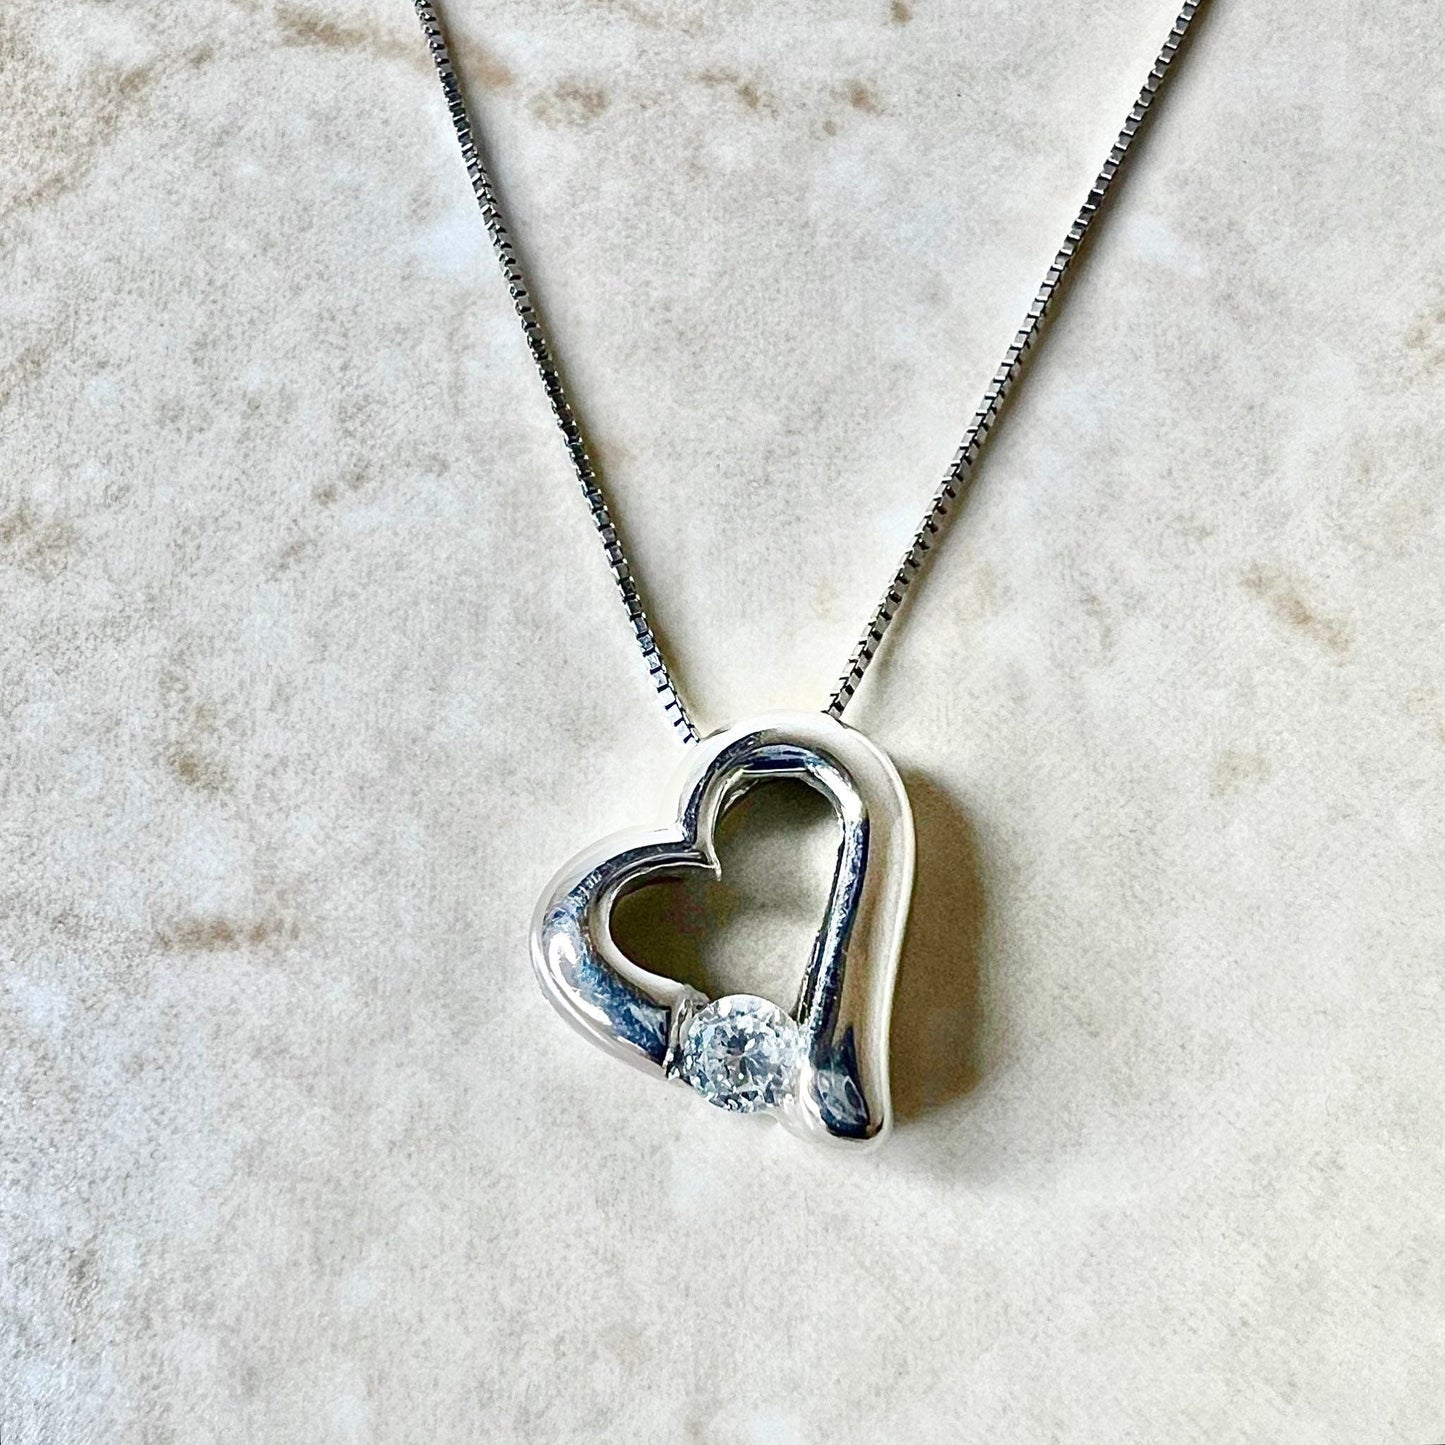 14K Diamond Heart Pendant Necklace - White Gold Solitaire Necklace - Diamond Pendant - Heart Diamond Necklace - Solitaire Heart Necklace